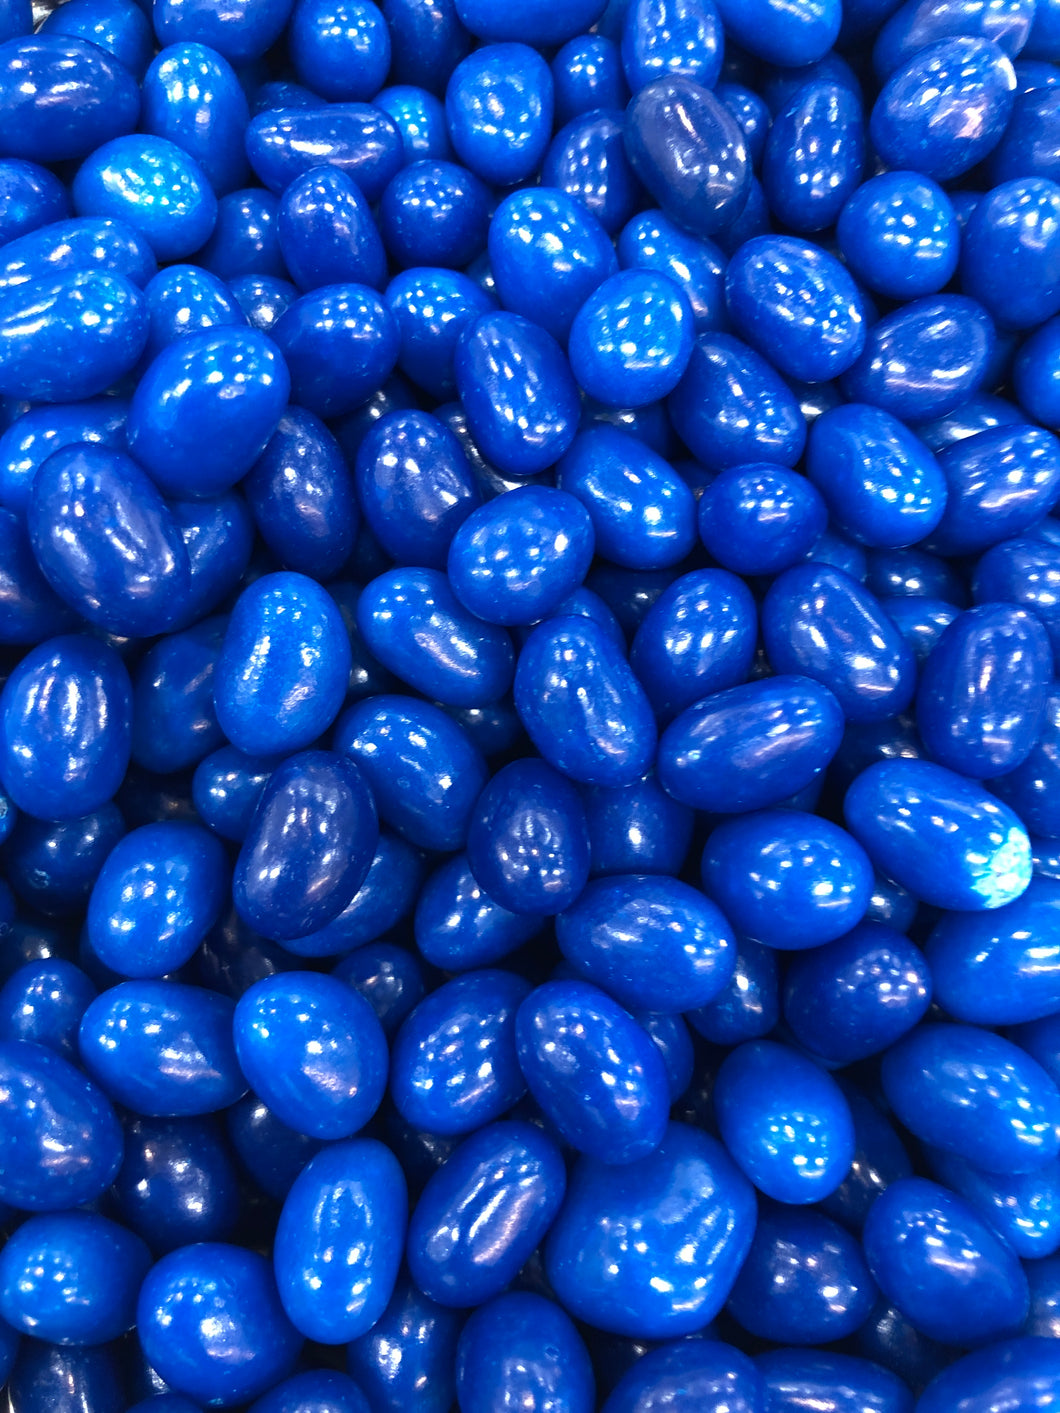 Dark Blueberry Jelly Beans